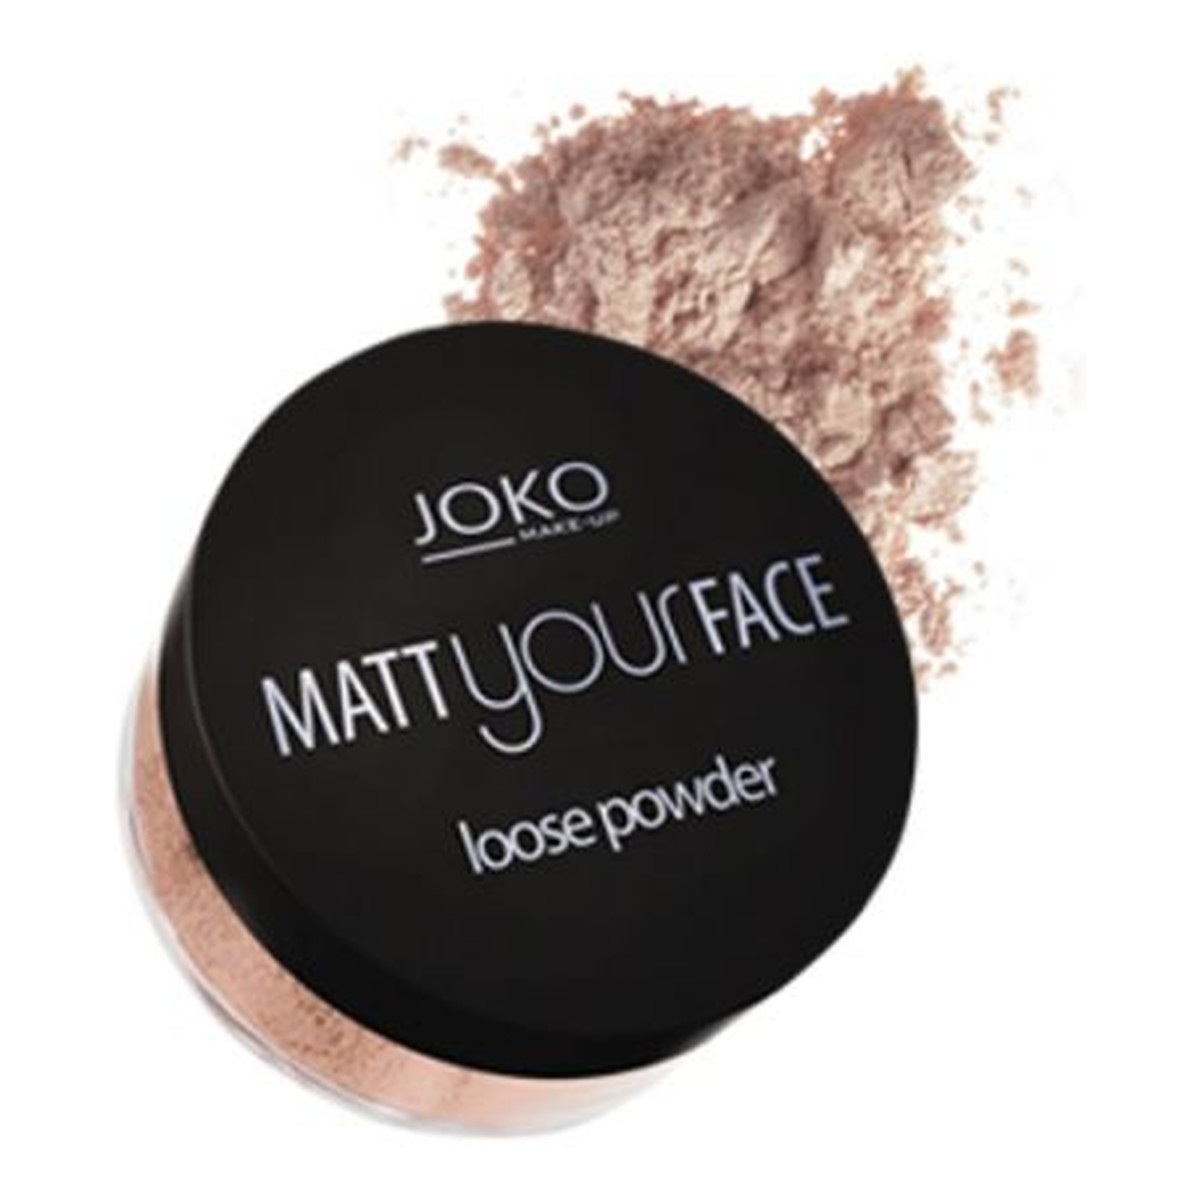 Joko Matt Your Face Powder Matujący puder sypki 23g